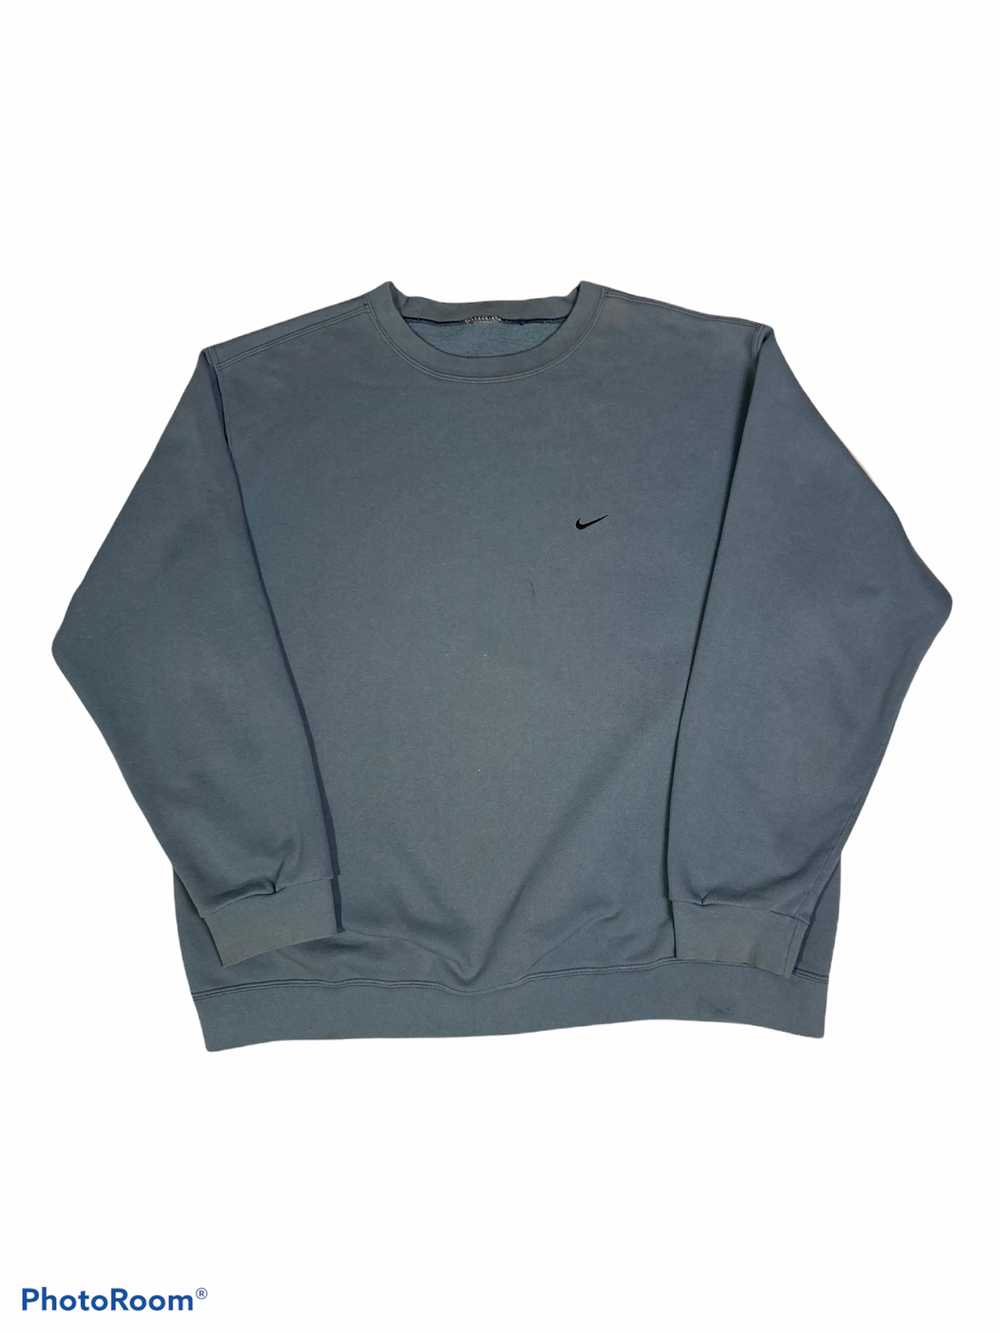 Vintage 90s Nike Baby Blue XL Sweatshirt - image 2